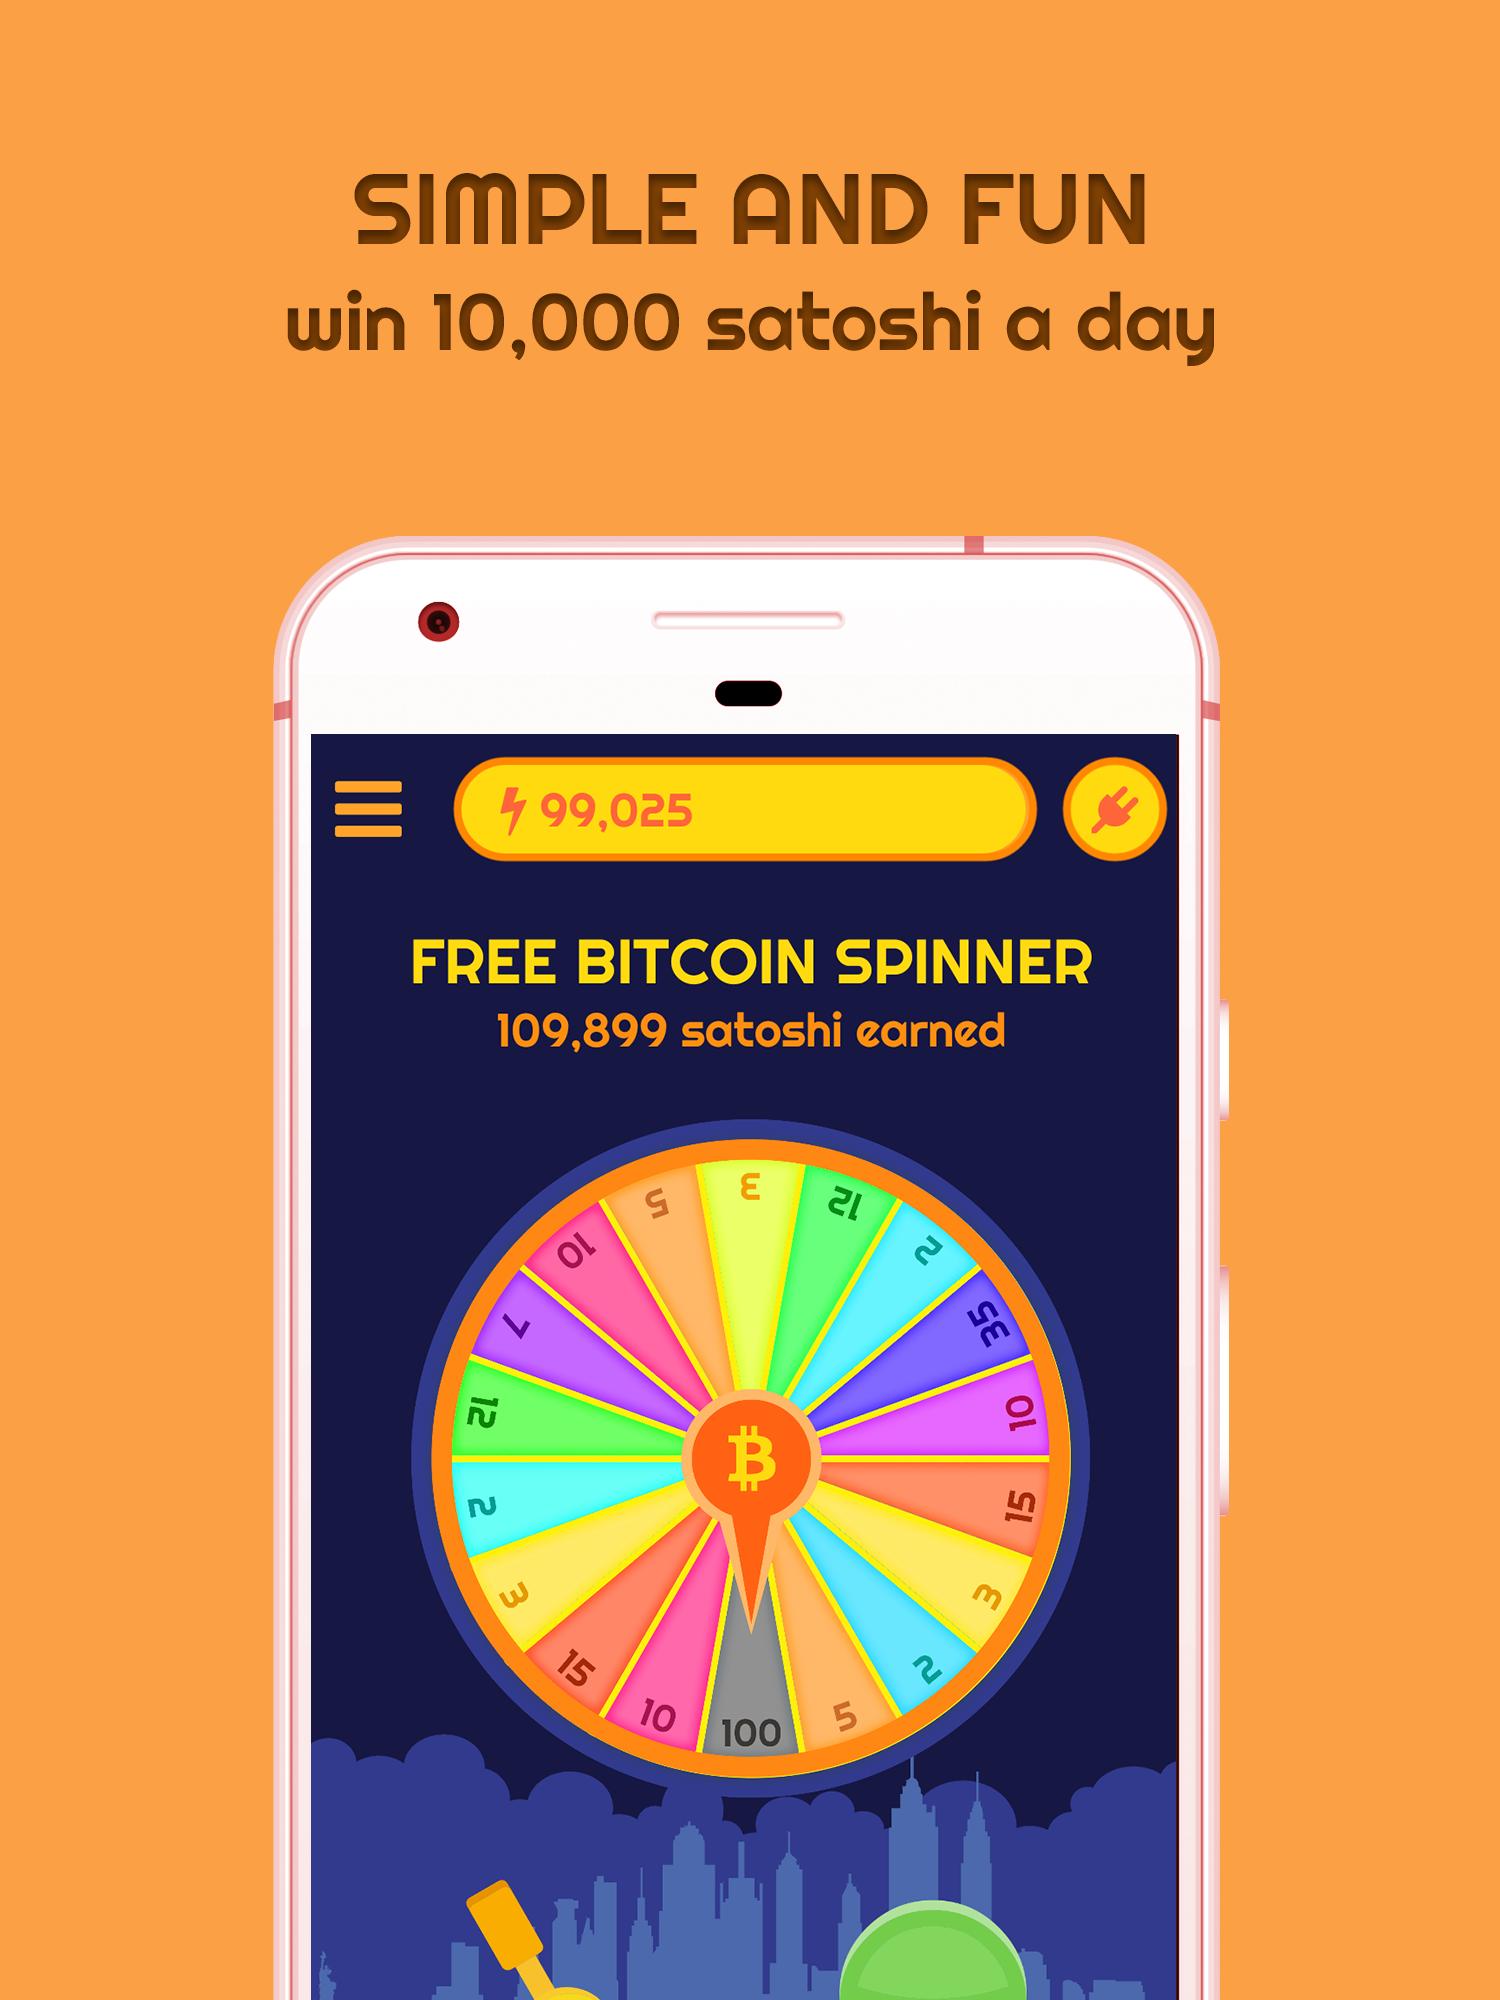 BTCspinner - Bitcoin Spinner Game, Bitcoin Faucet, Bitcoin Lottery